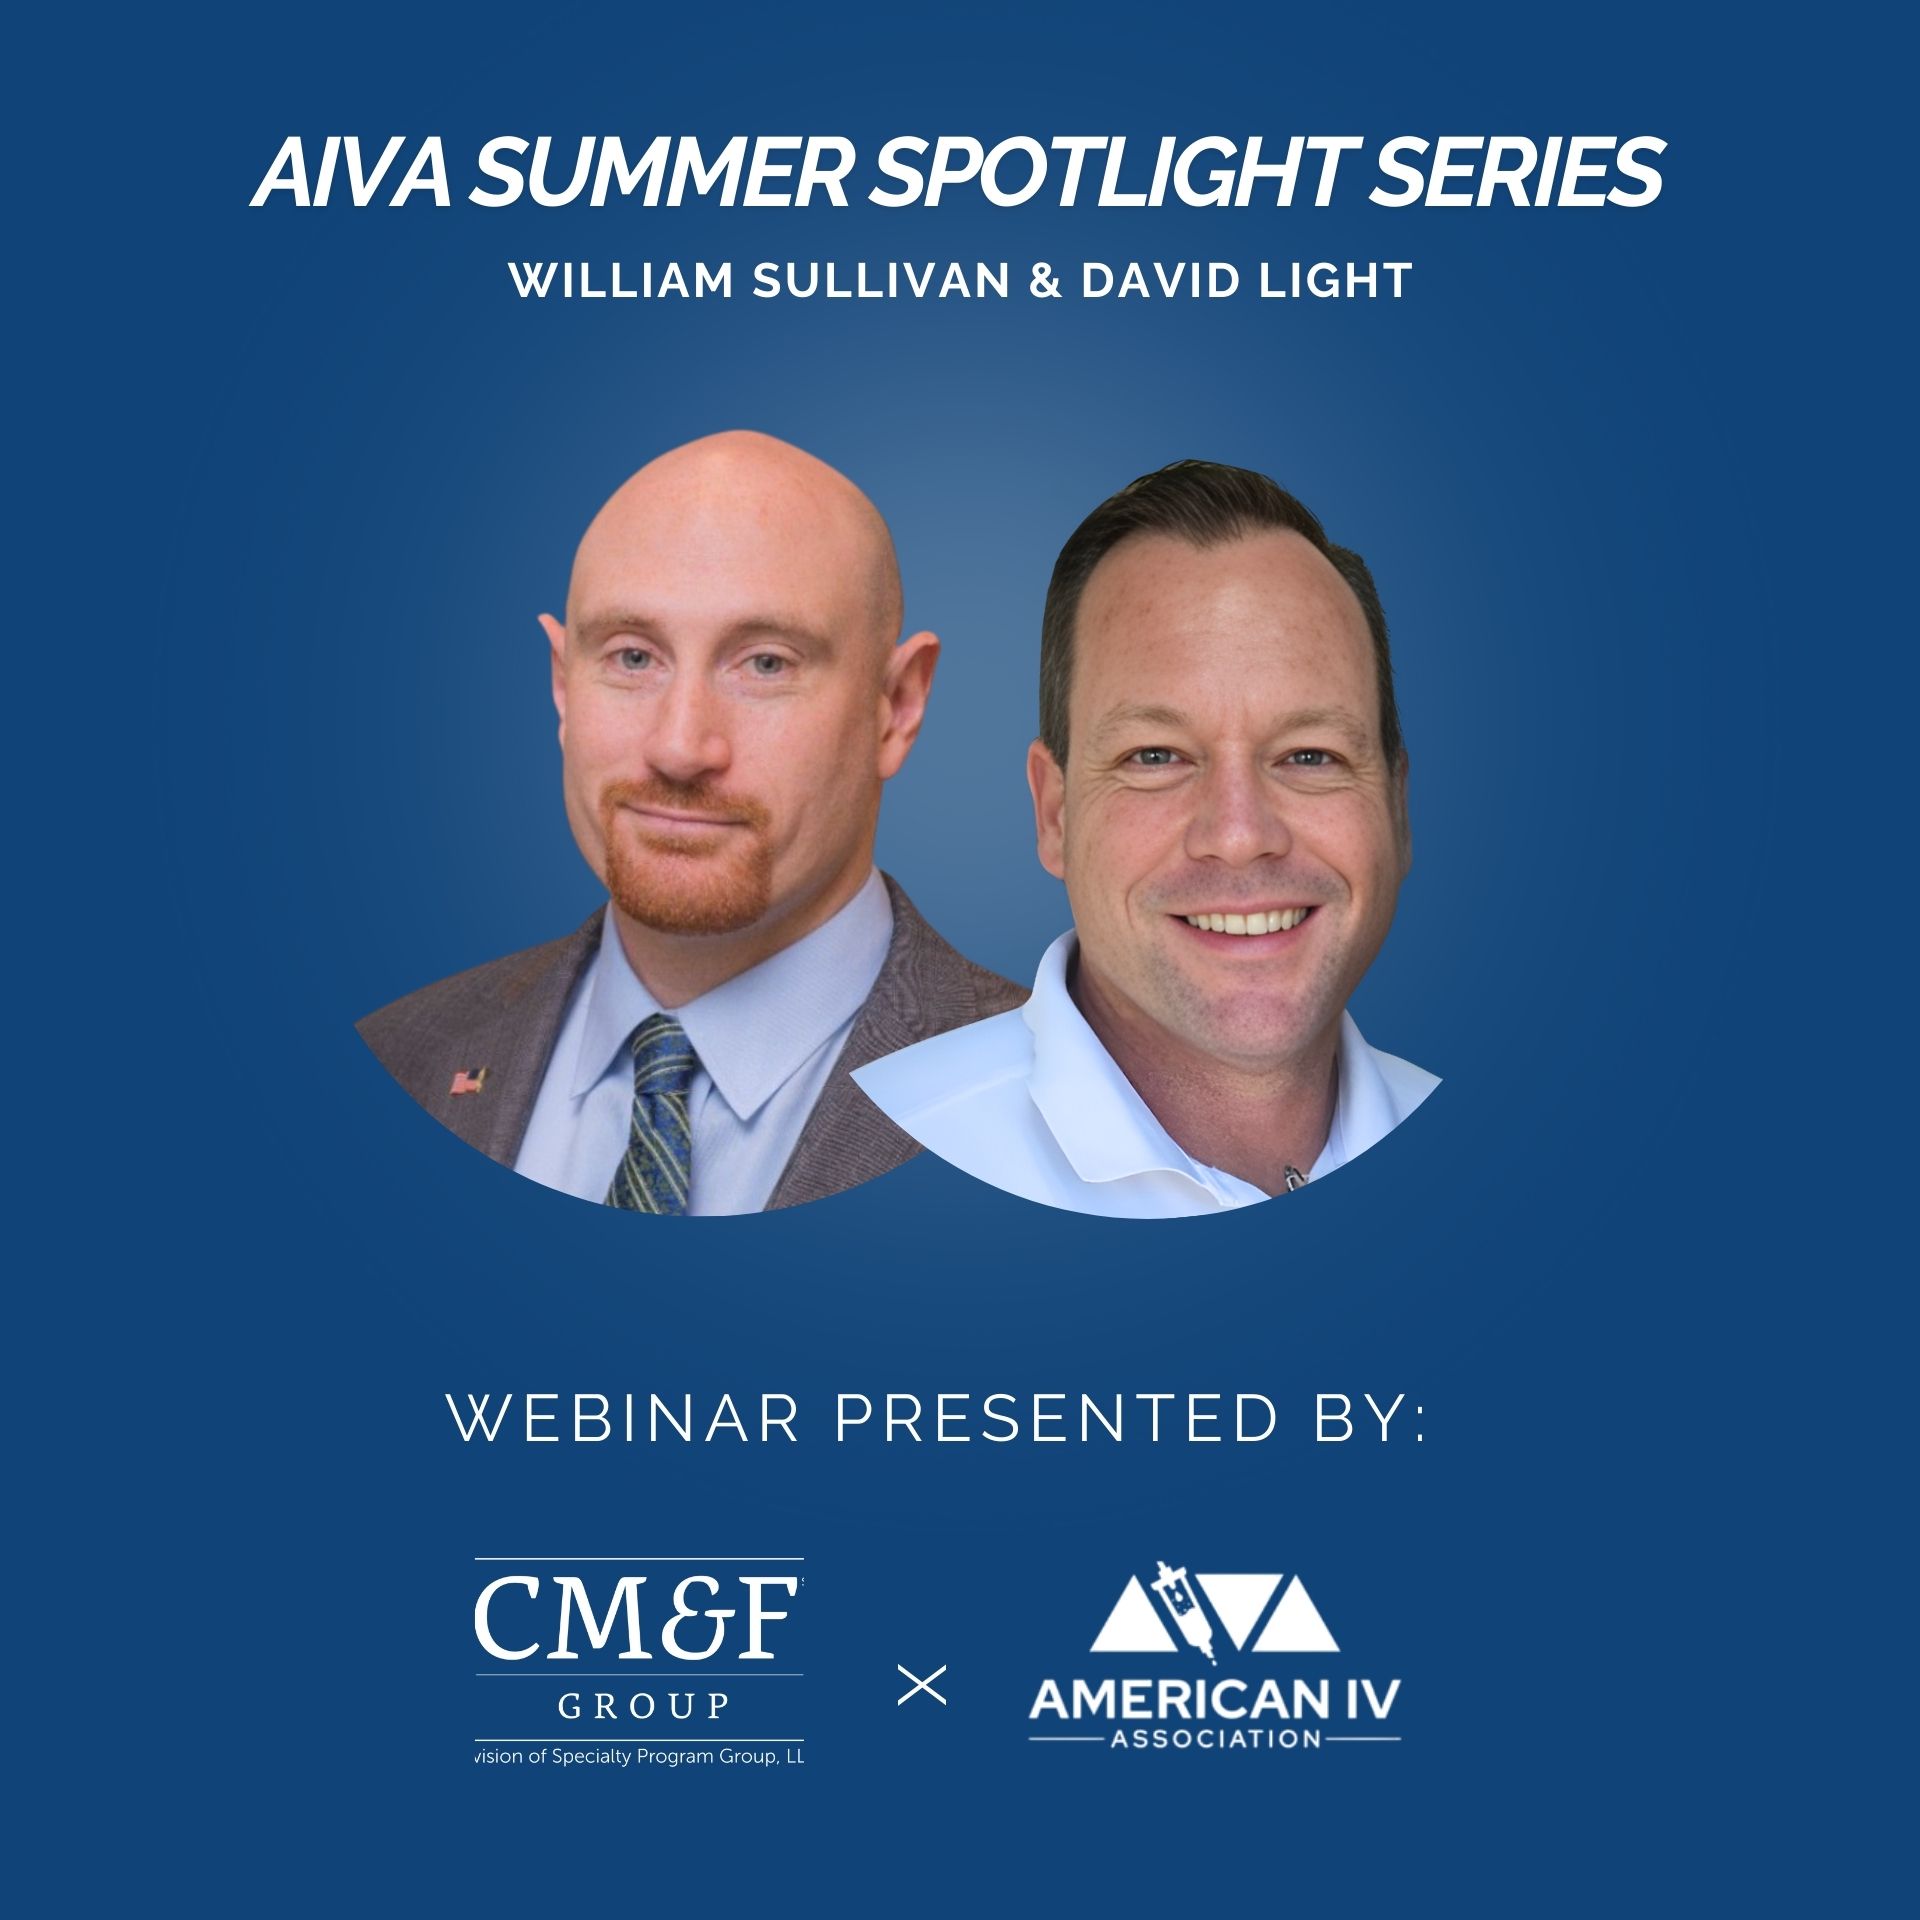 AIVA Summer Series Webinar with William Sullivan from CM&F Group